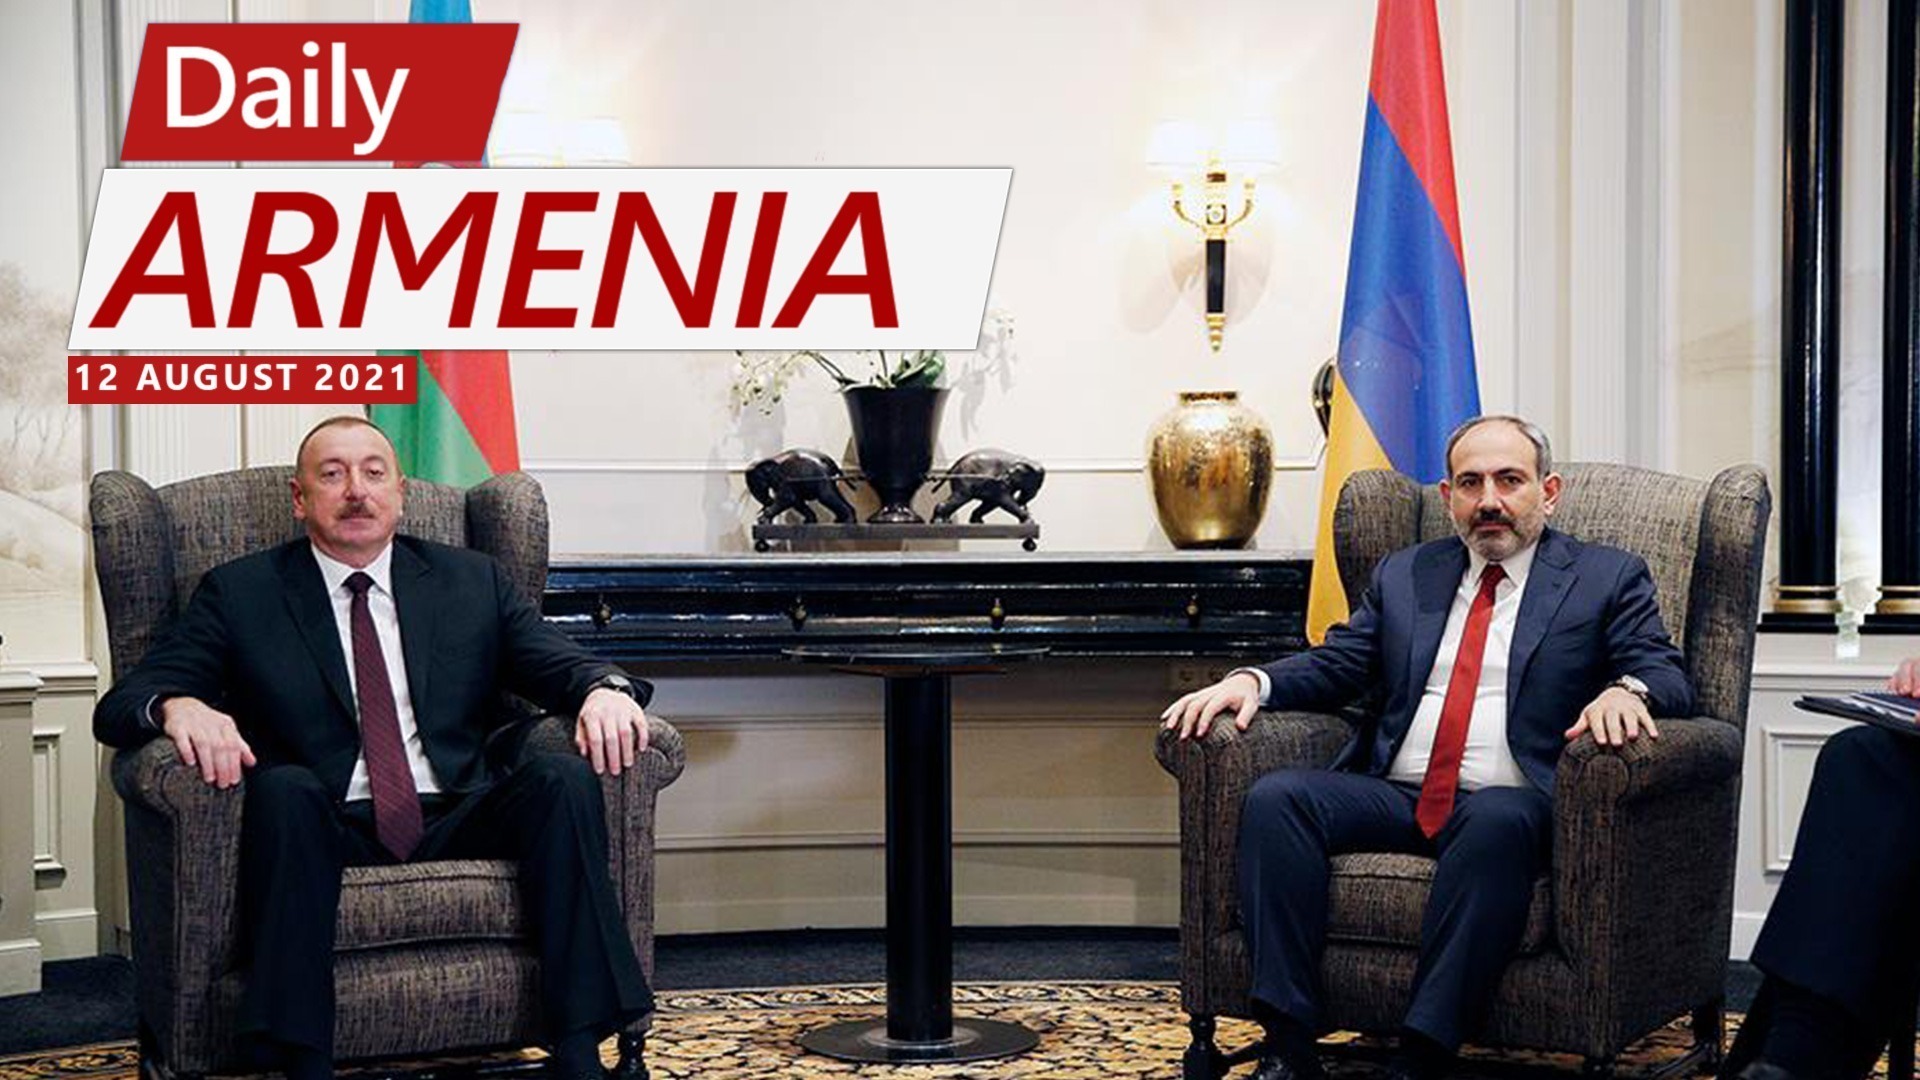 Armenia is ready to restart peace talks with Azerbaijan, says Pashinyan